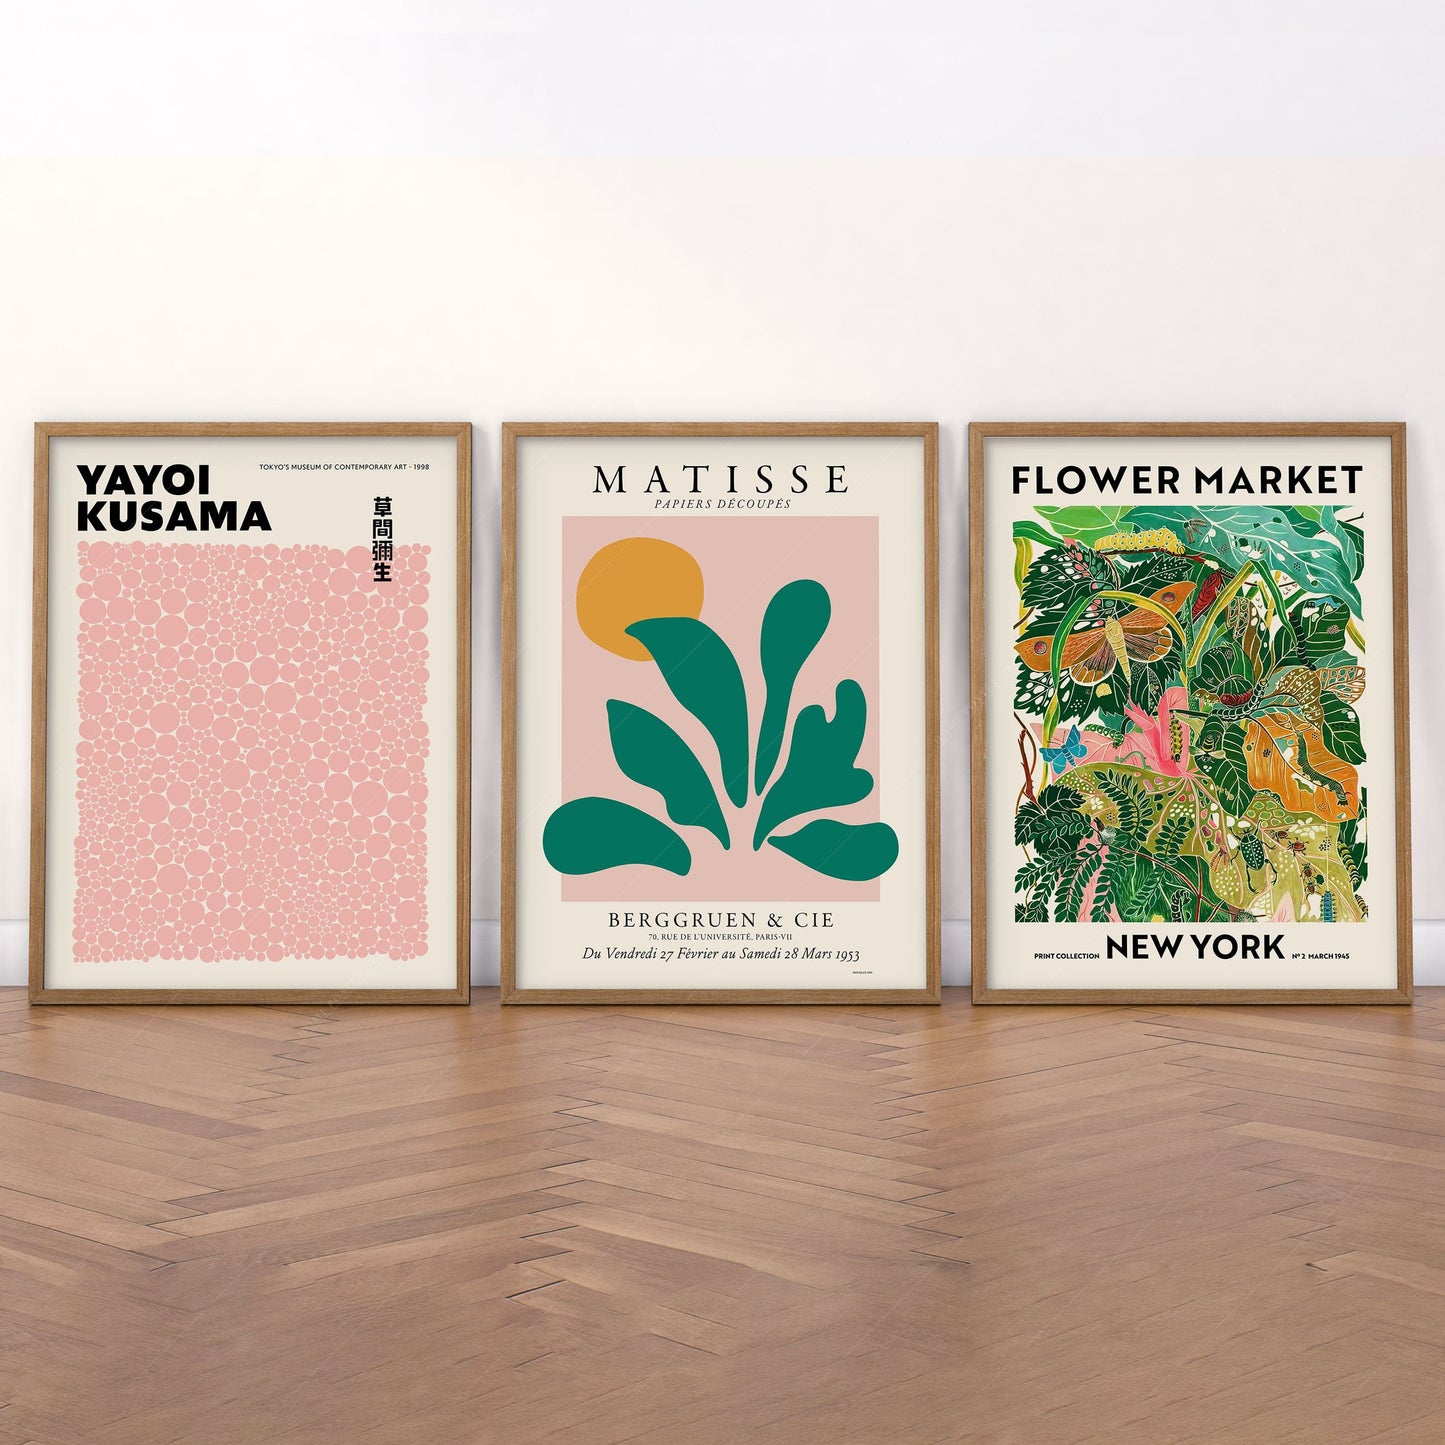 Home Poster Decor Henri Matisse, Modern Gallery Wall, Henri Matisse, Yayoi Kusama, Flower Market New York, Set of 3 Prints